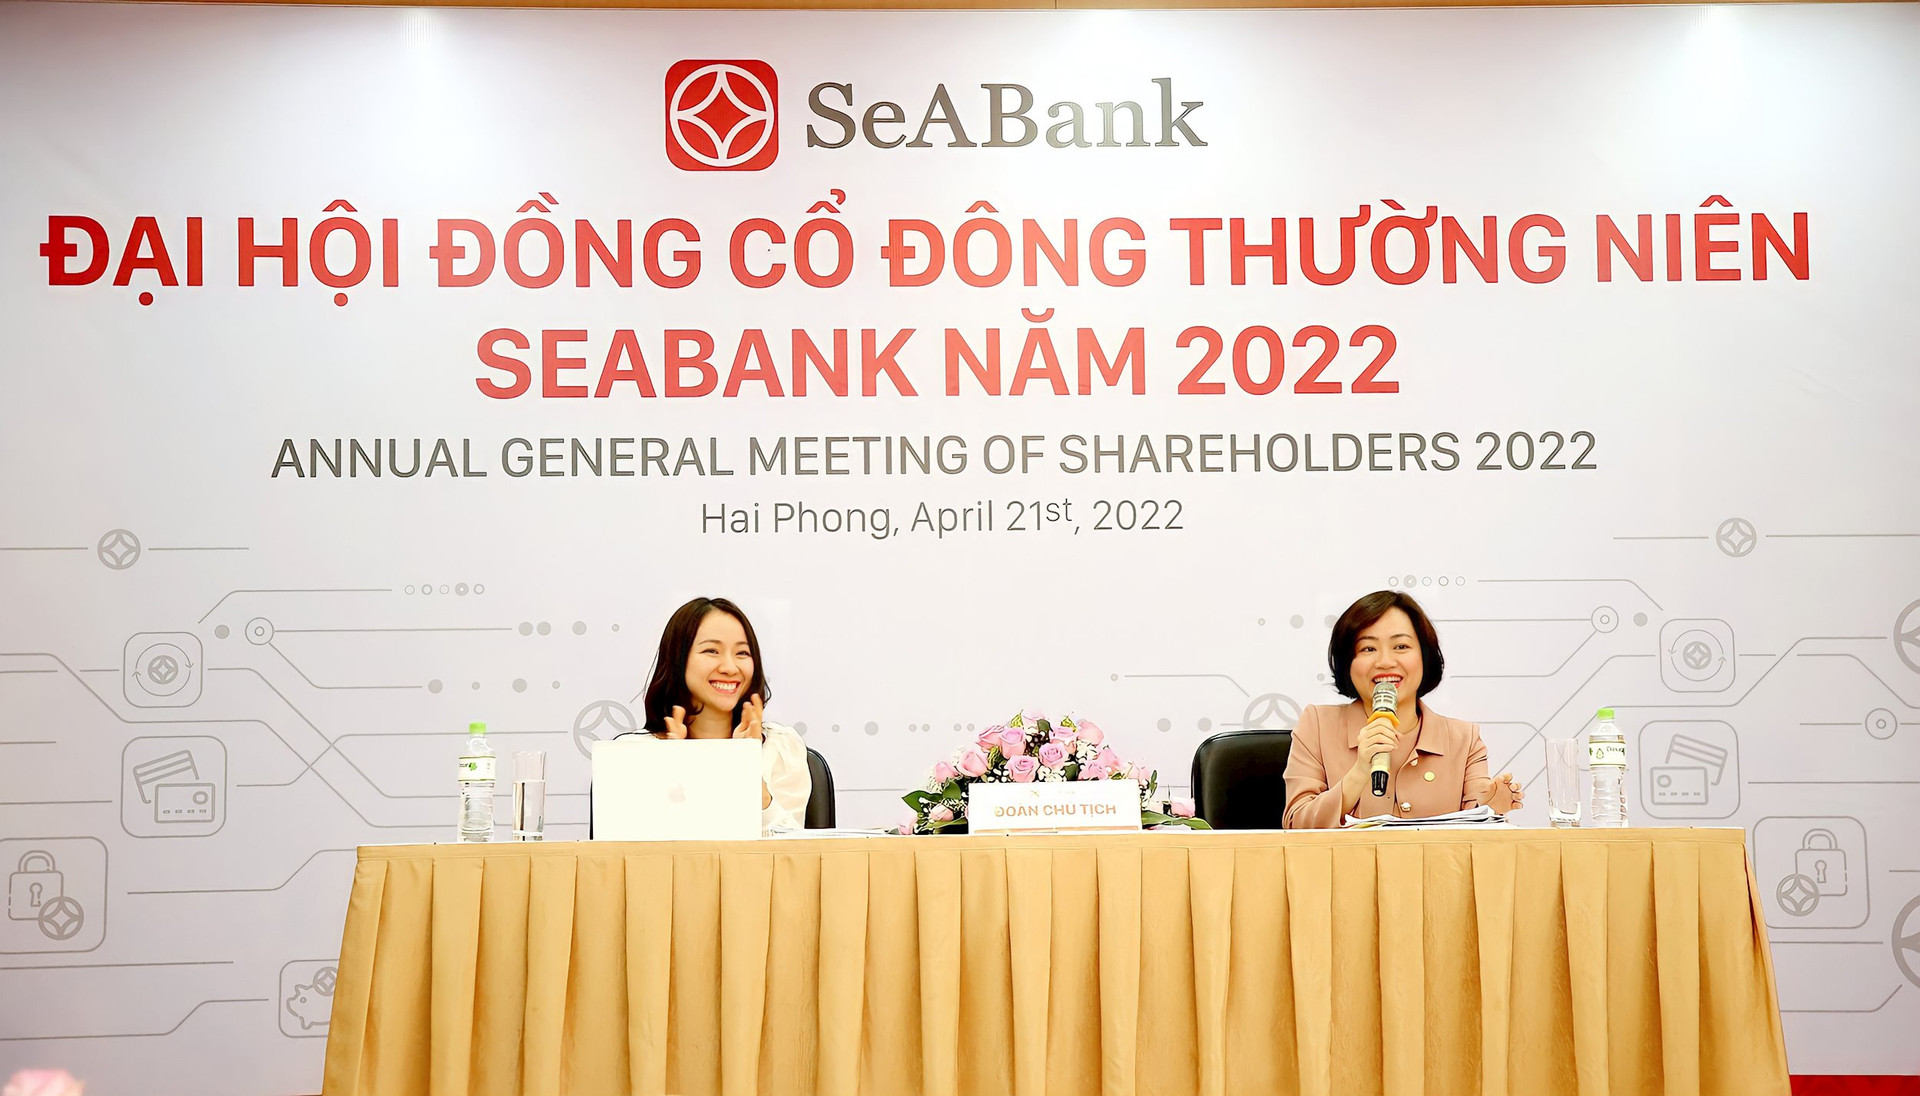 seabank-1_-seabank-to-chuc-thanh-cong-dai-hoi-dong-co-dong-thuong-nien-2022-2-.jpg